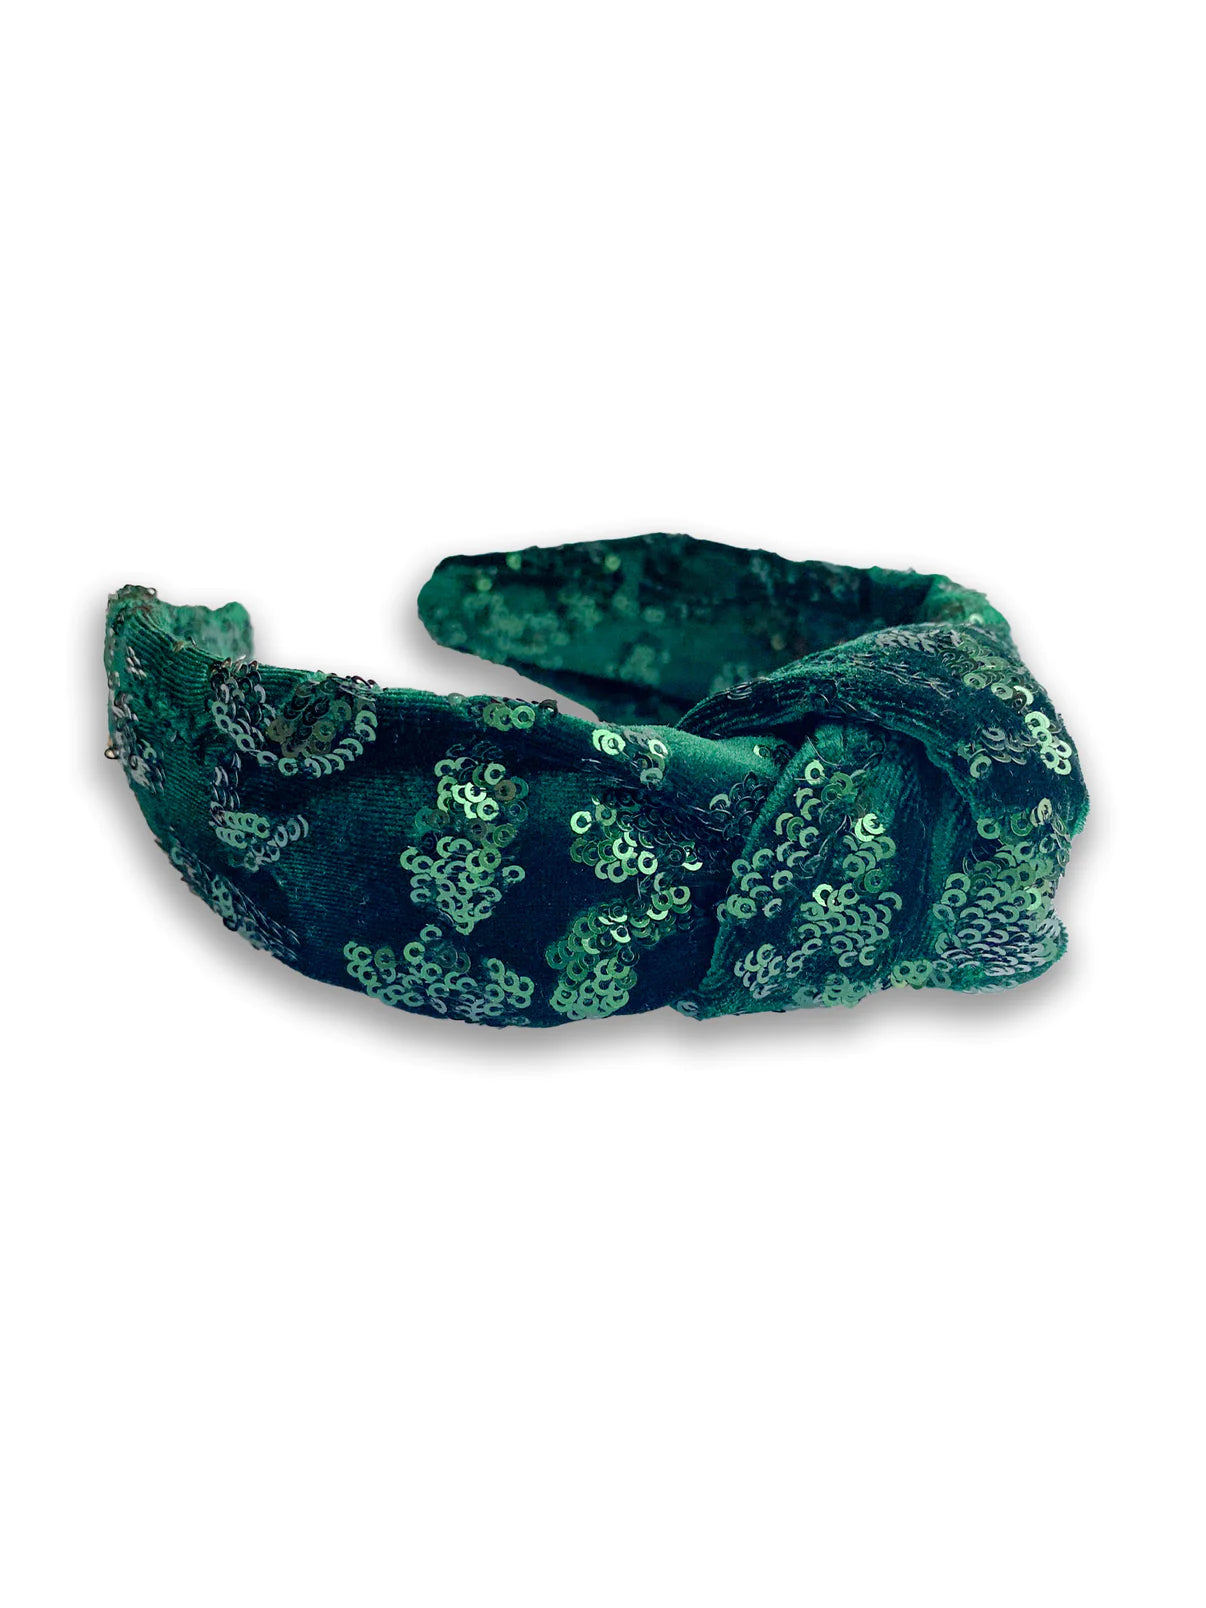 Emily McCarthy Headband - Green Sequin Cheetah